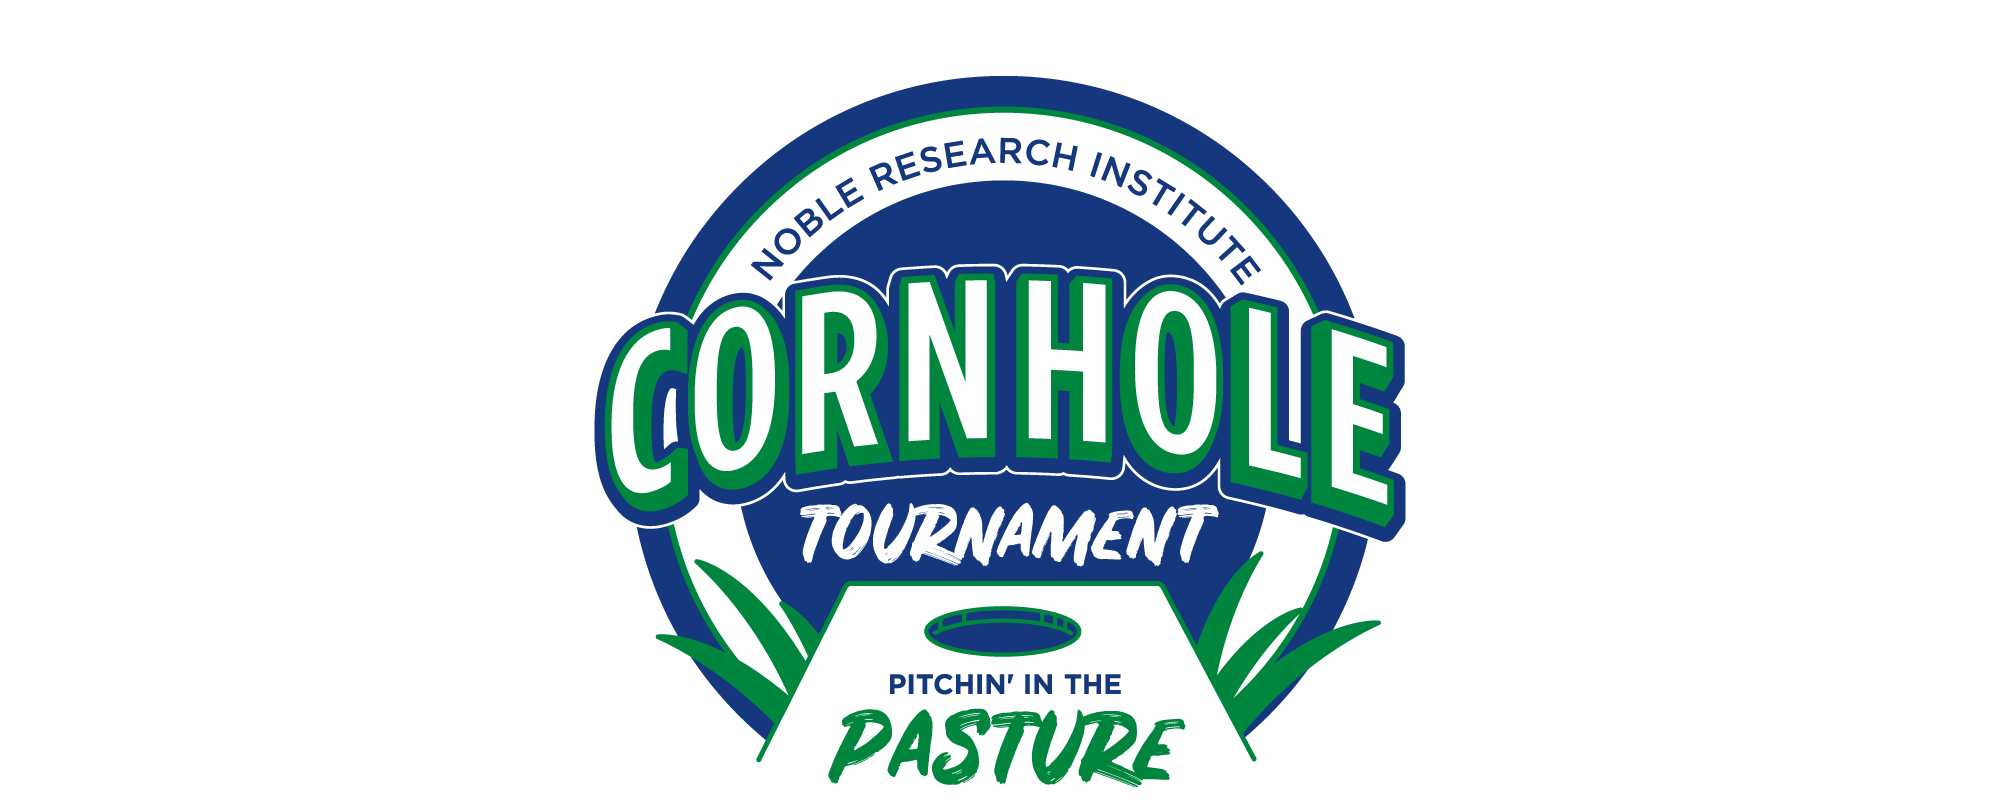 Noble Research Institute Cornhole Tournament: Pitchin' in the Pasture